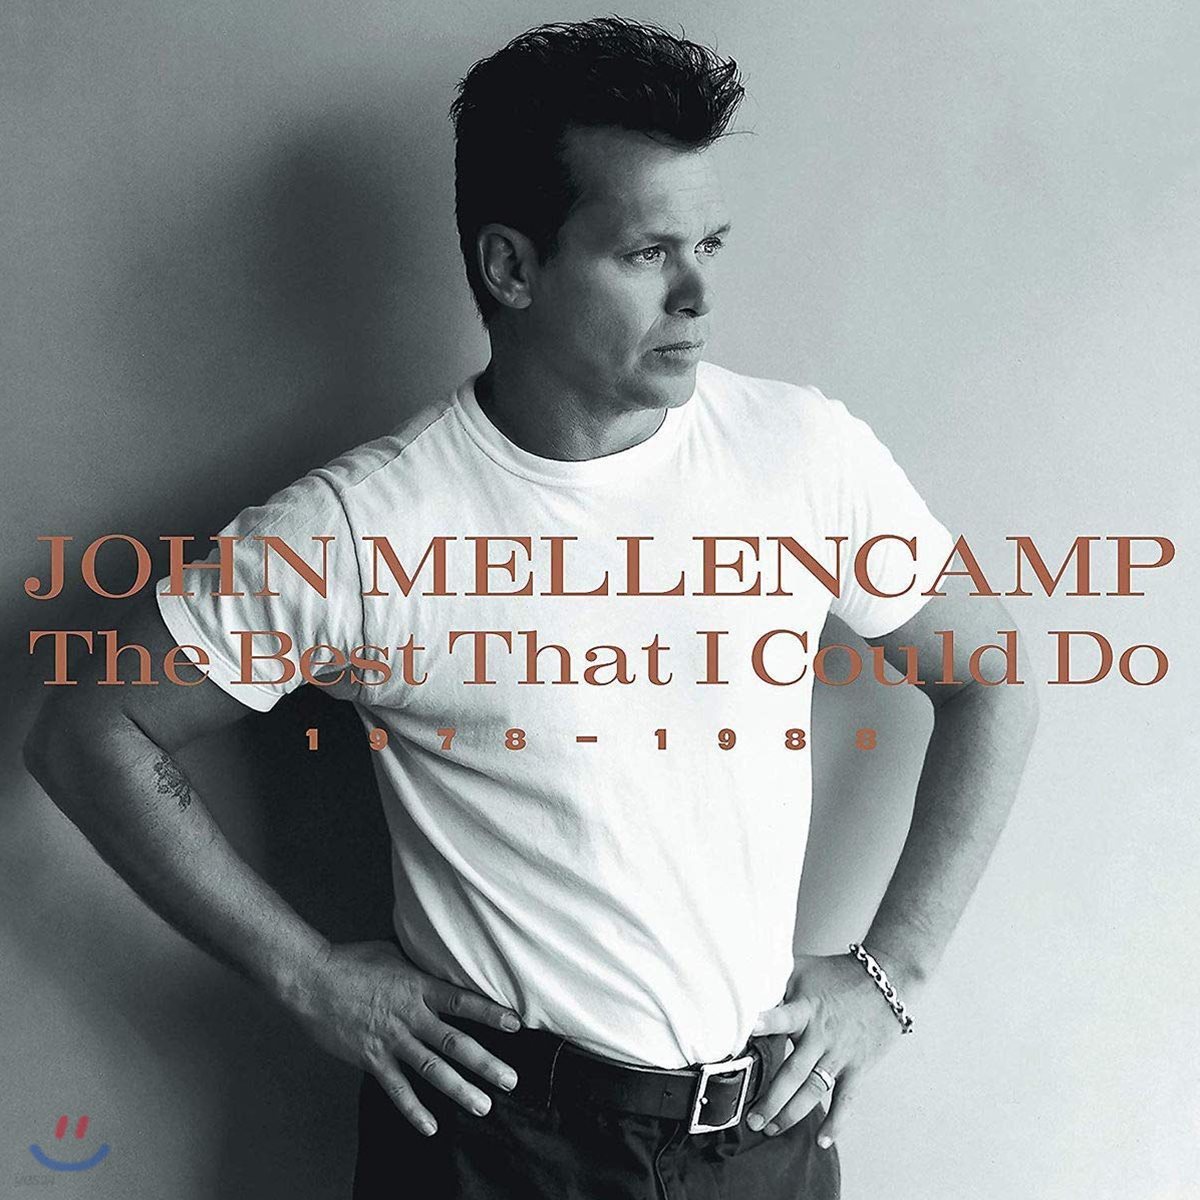 John Mellencamp (존 멜렌캠프) - The Best That I Could Do 1978-1988 [2LP]